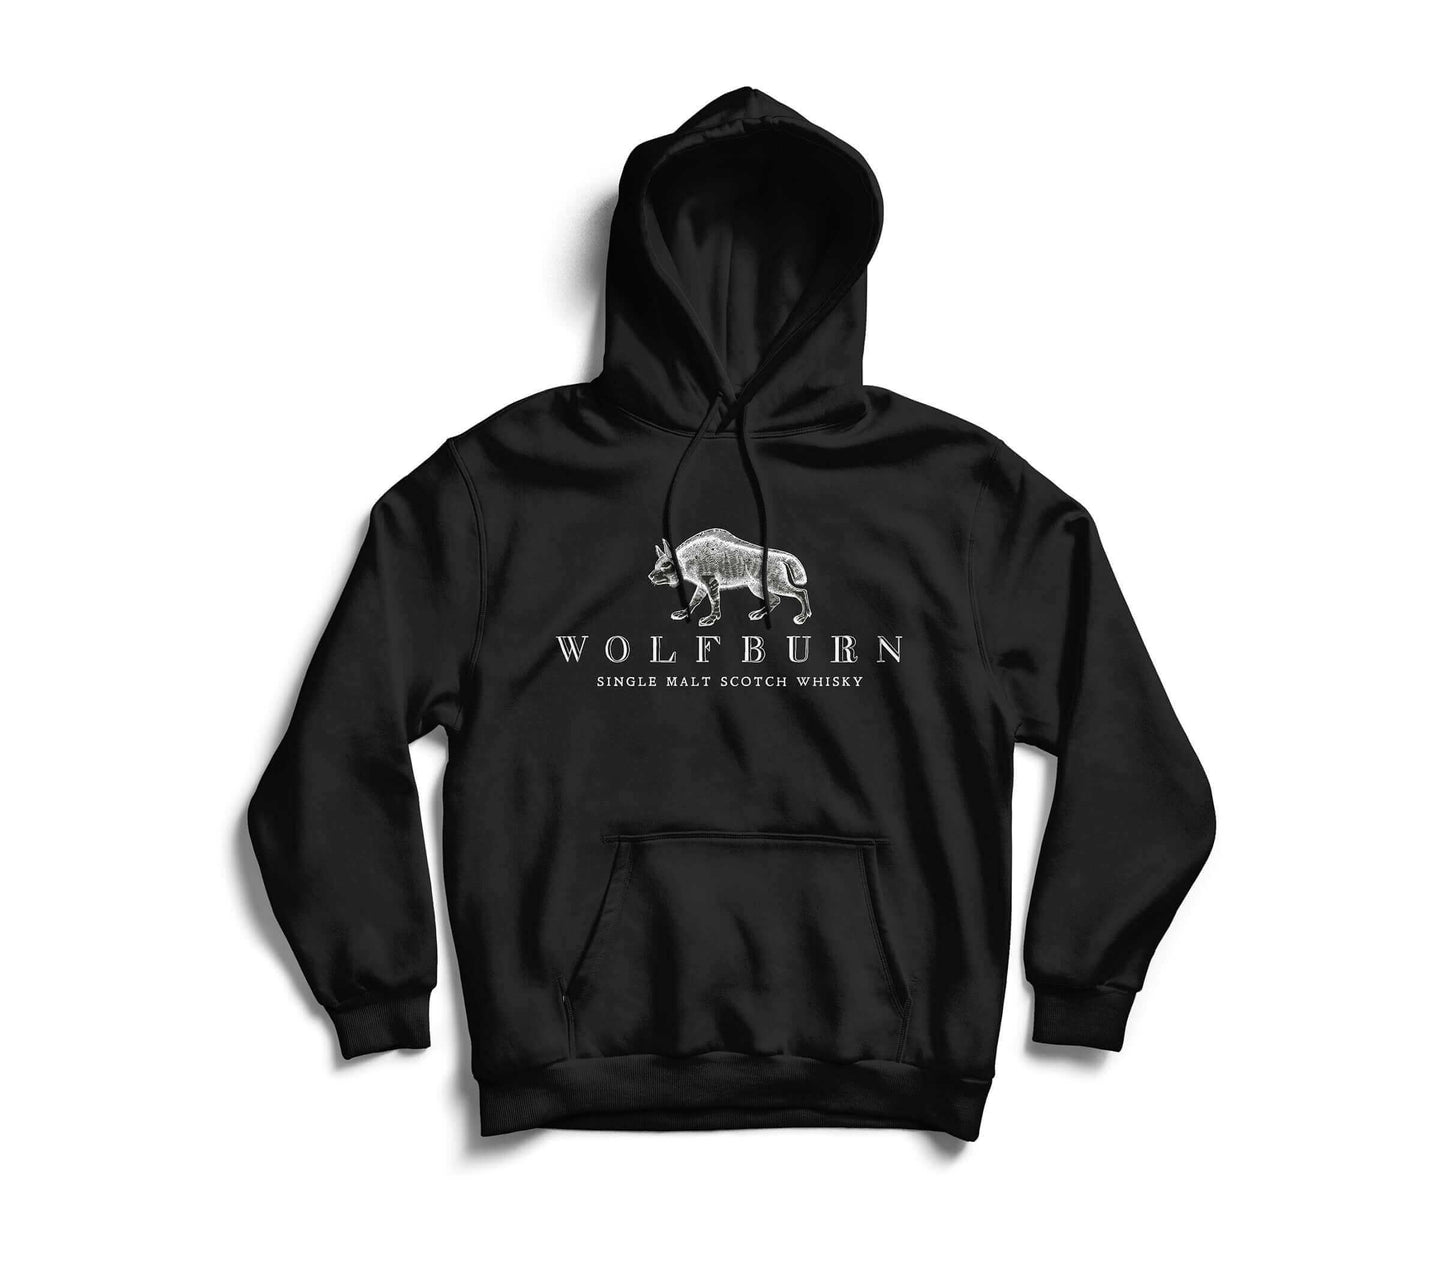 Wolfburn Distillery Wolfburn Hoodie ‘Made in Thurso’ Hooded top. Screen printed 'Wolfburn' logo on the chest and large Made in Thurso on the back. £35.00